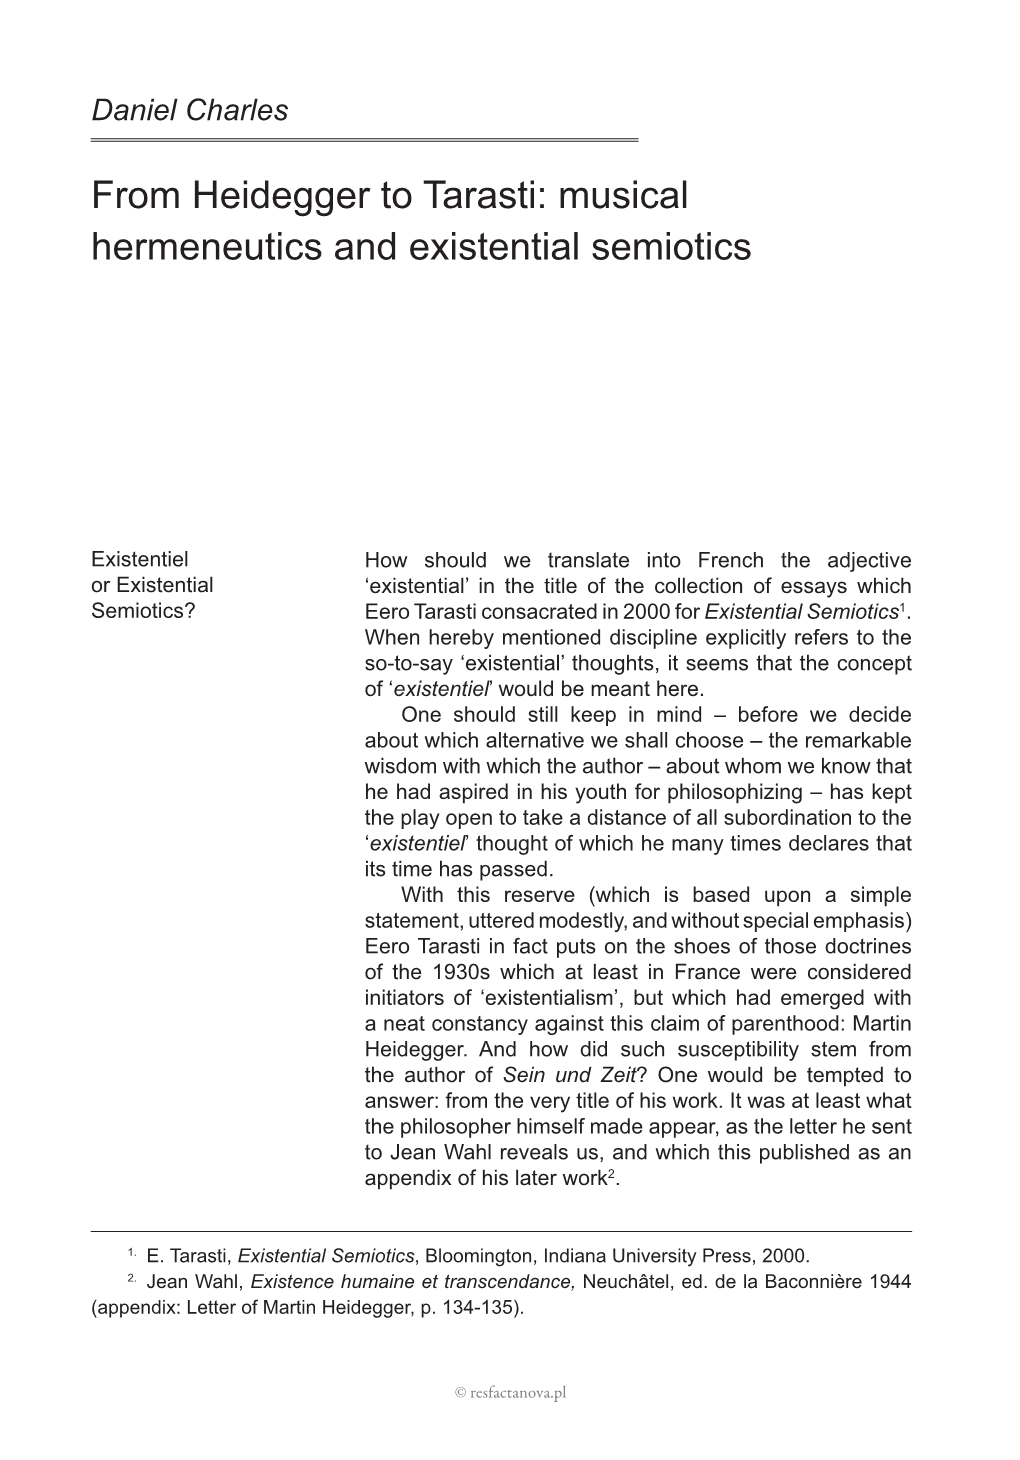 From Heidegger to Tarasti: Musical Hermeneutics and Existential Semiotics